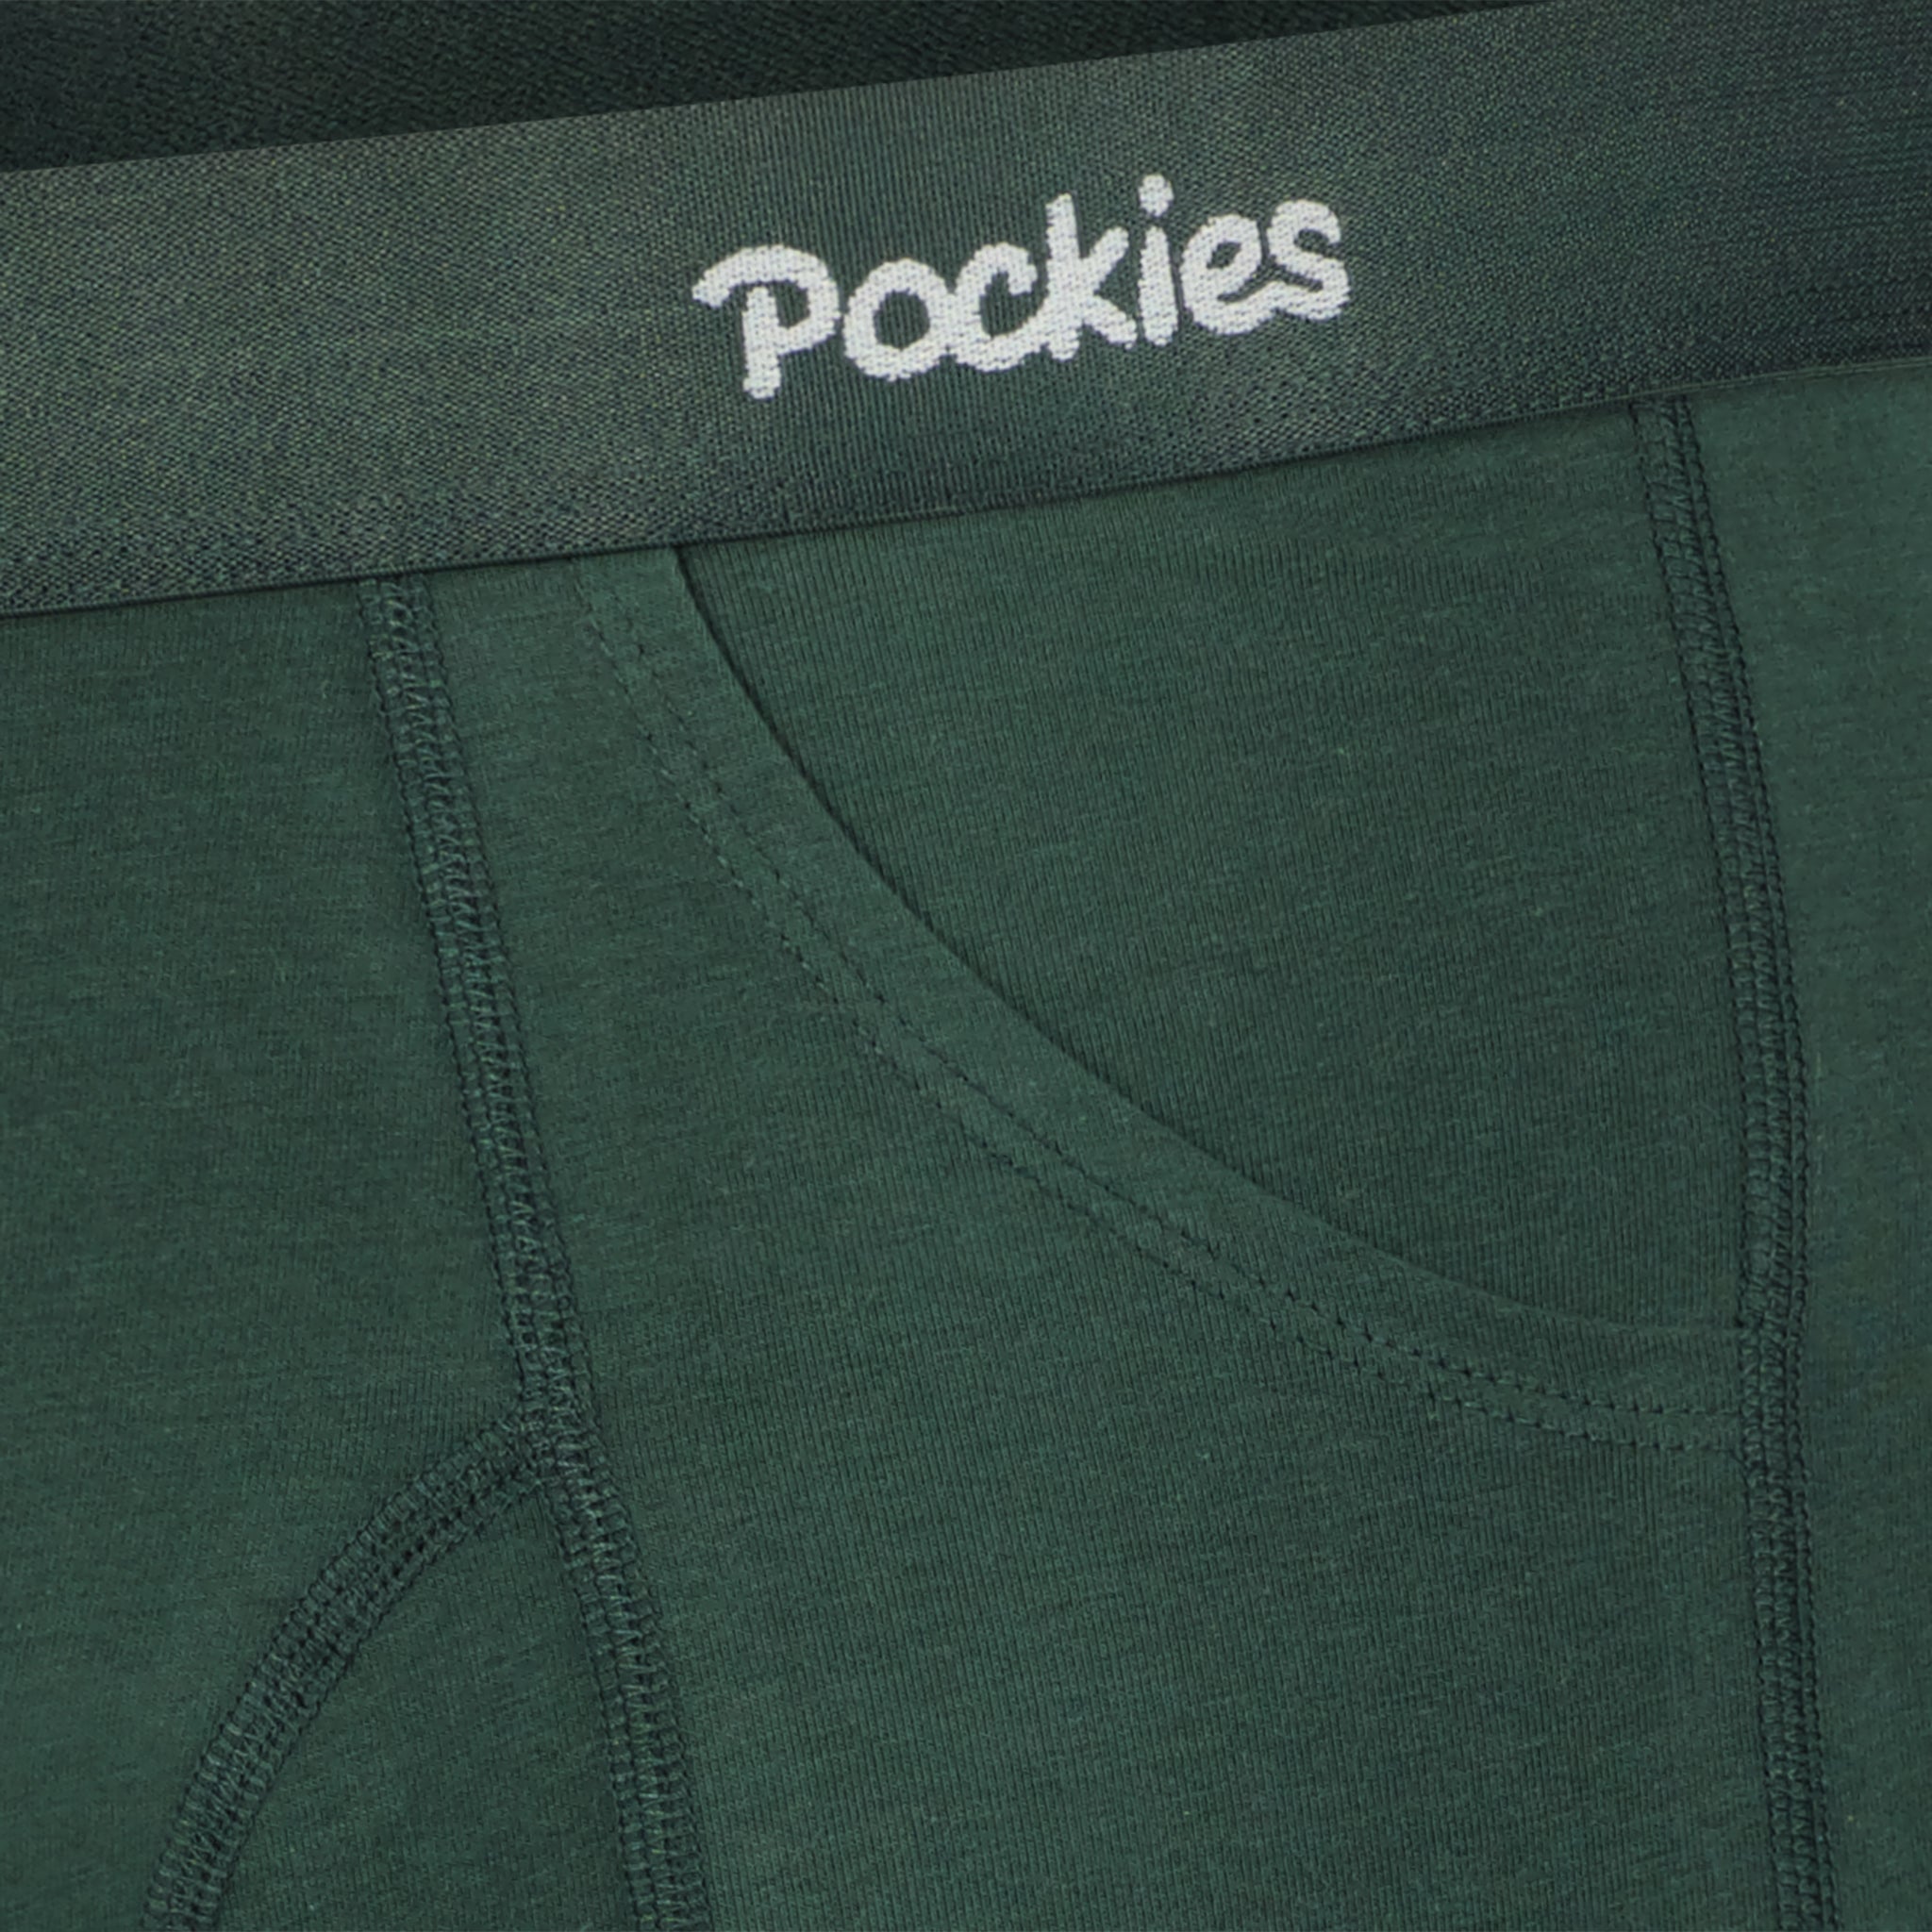 Green Boxer Briefs (2-pockets)